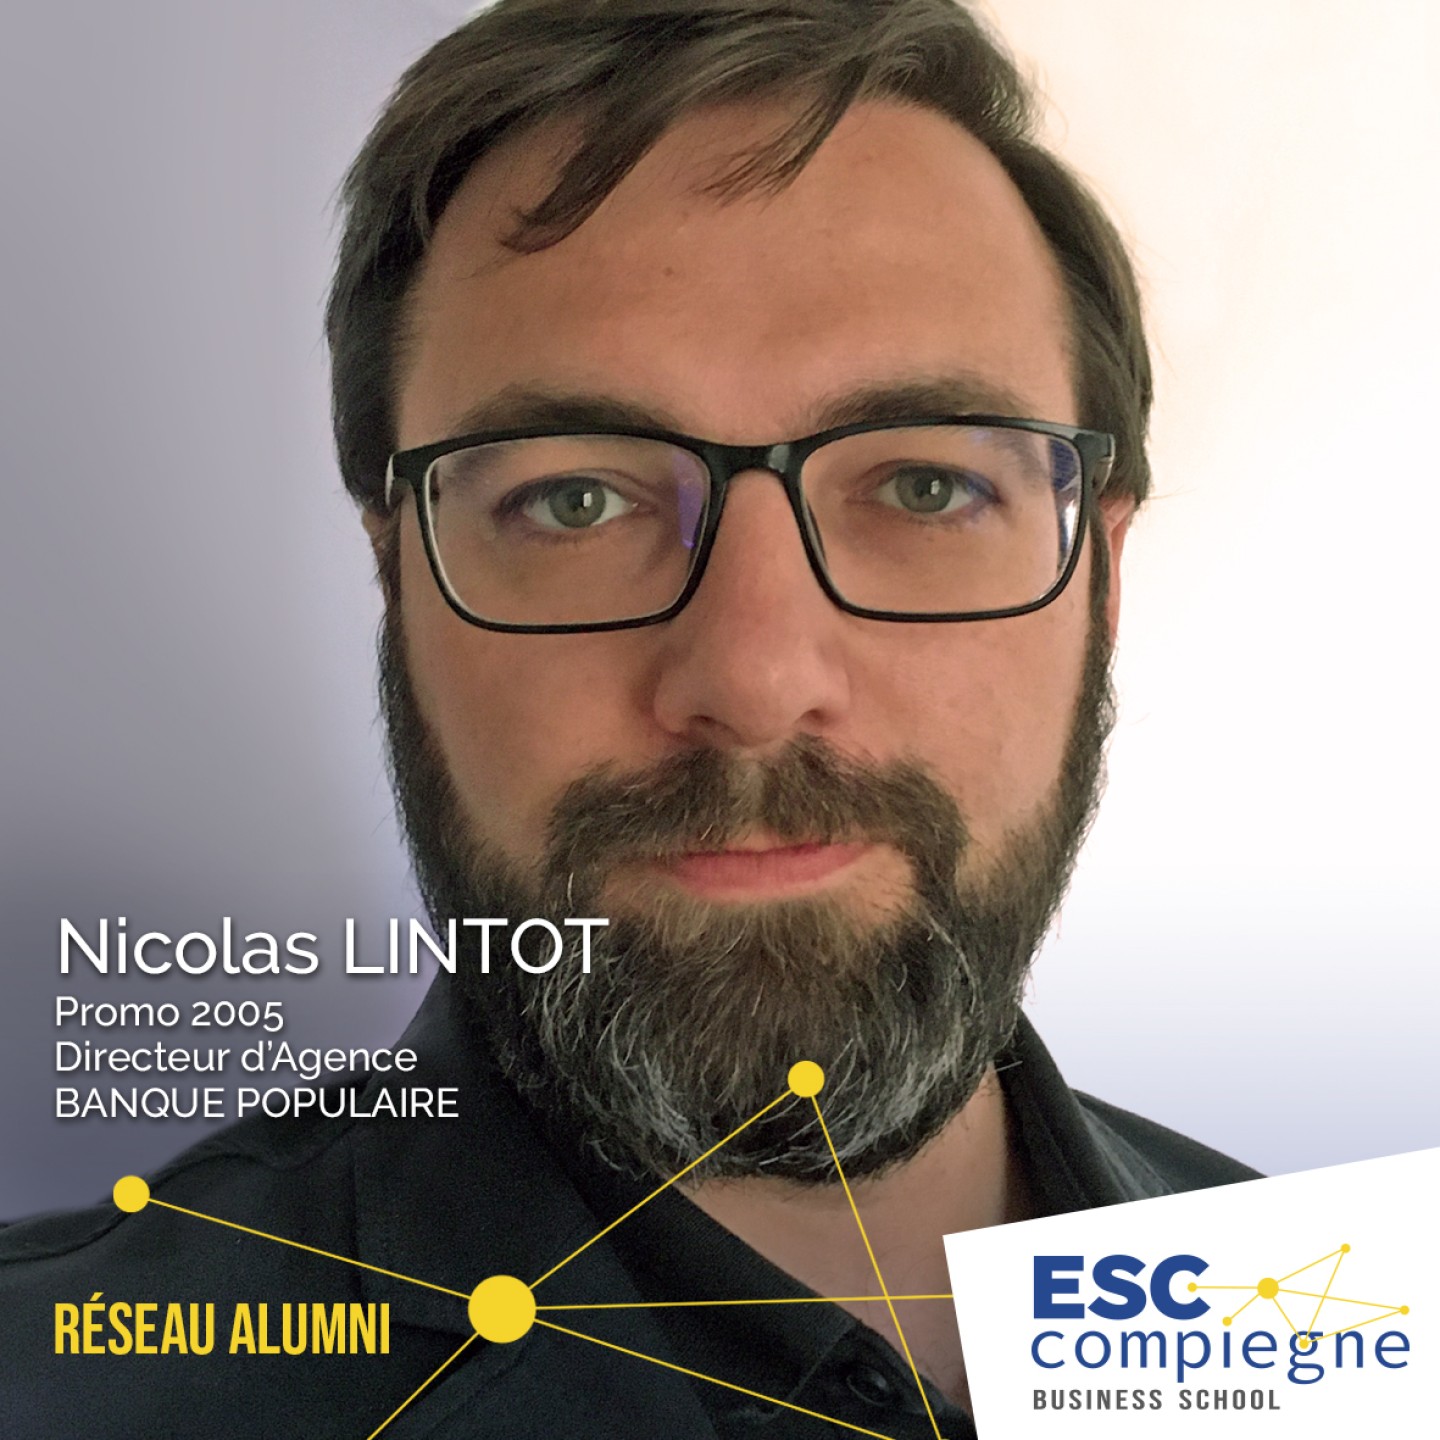 ESCC-Nicolas-Lintot